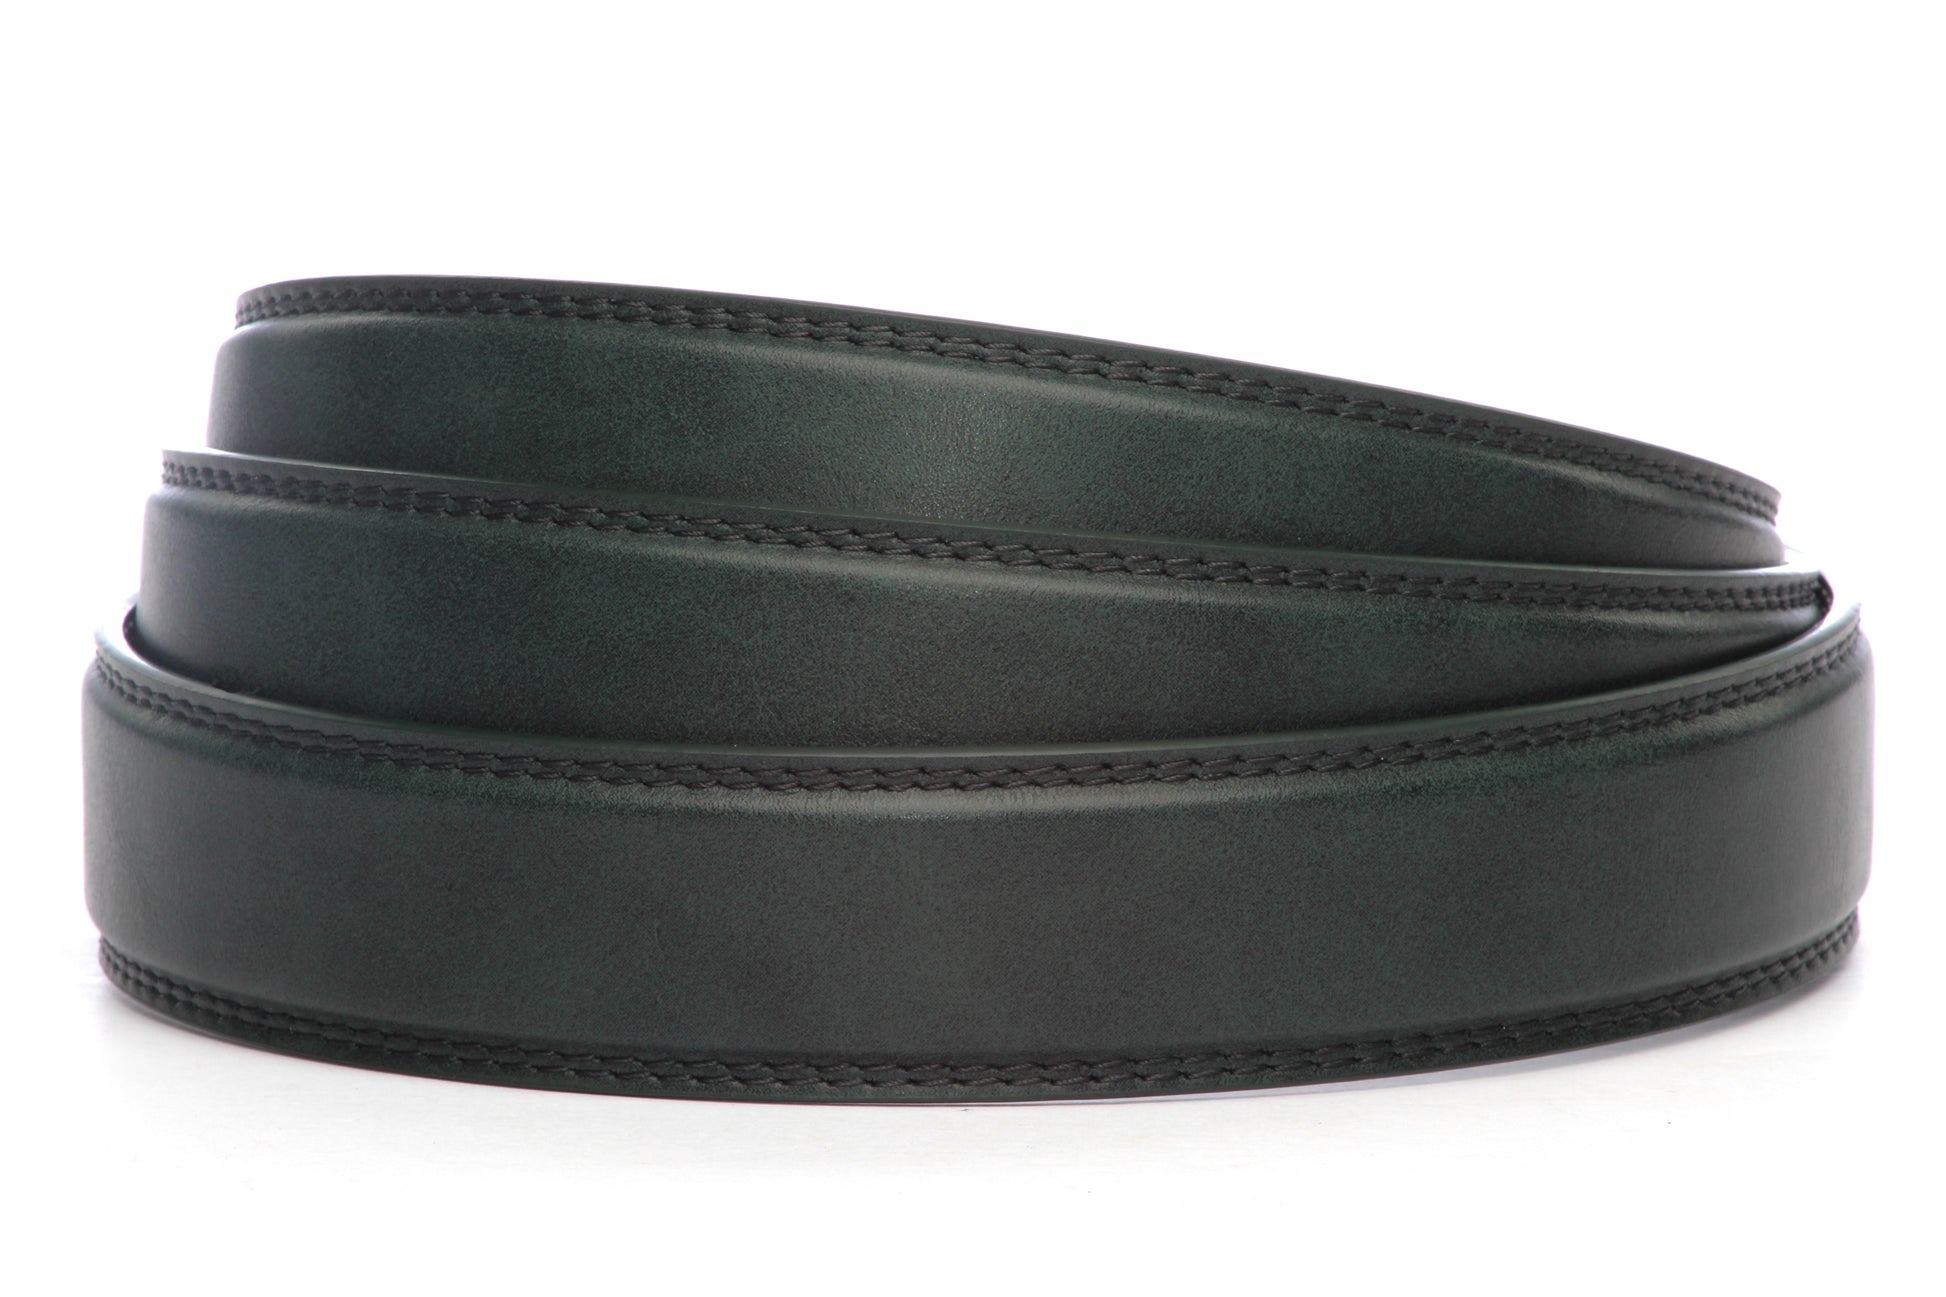 Men's vegan microfiber belt strap in forest green with a 1.25-inch width, formal look